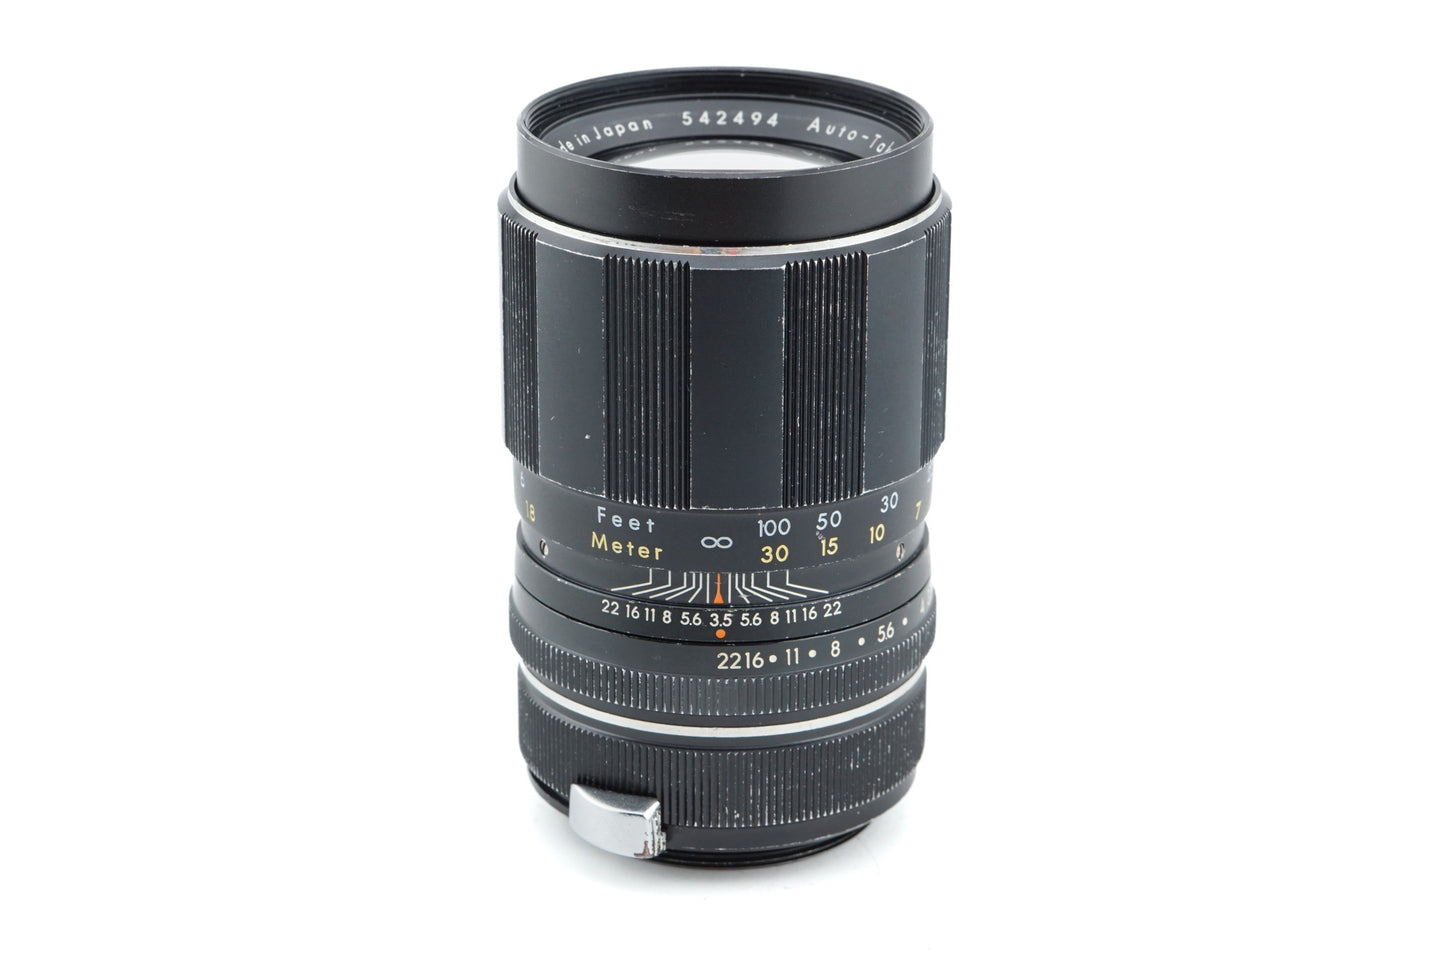 Pentax 135mm f3.5 Auto-Takumar - Lens